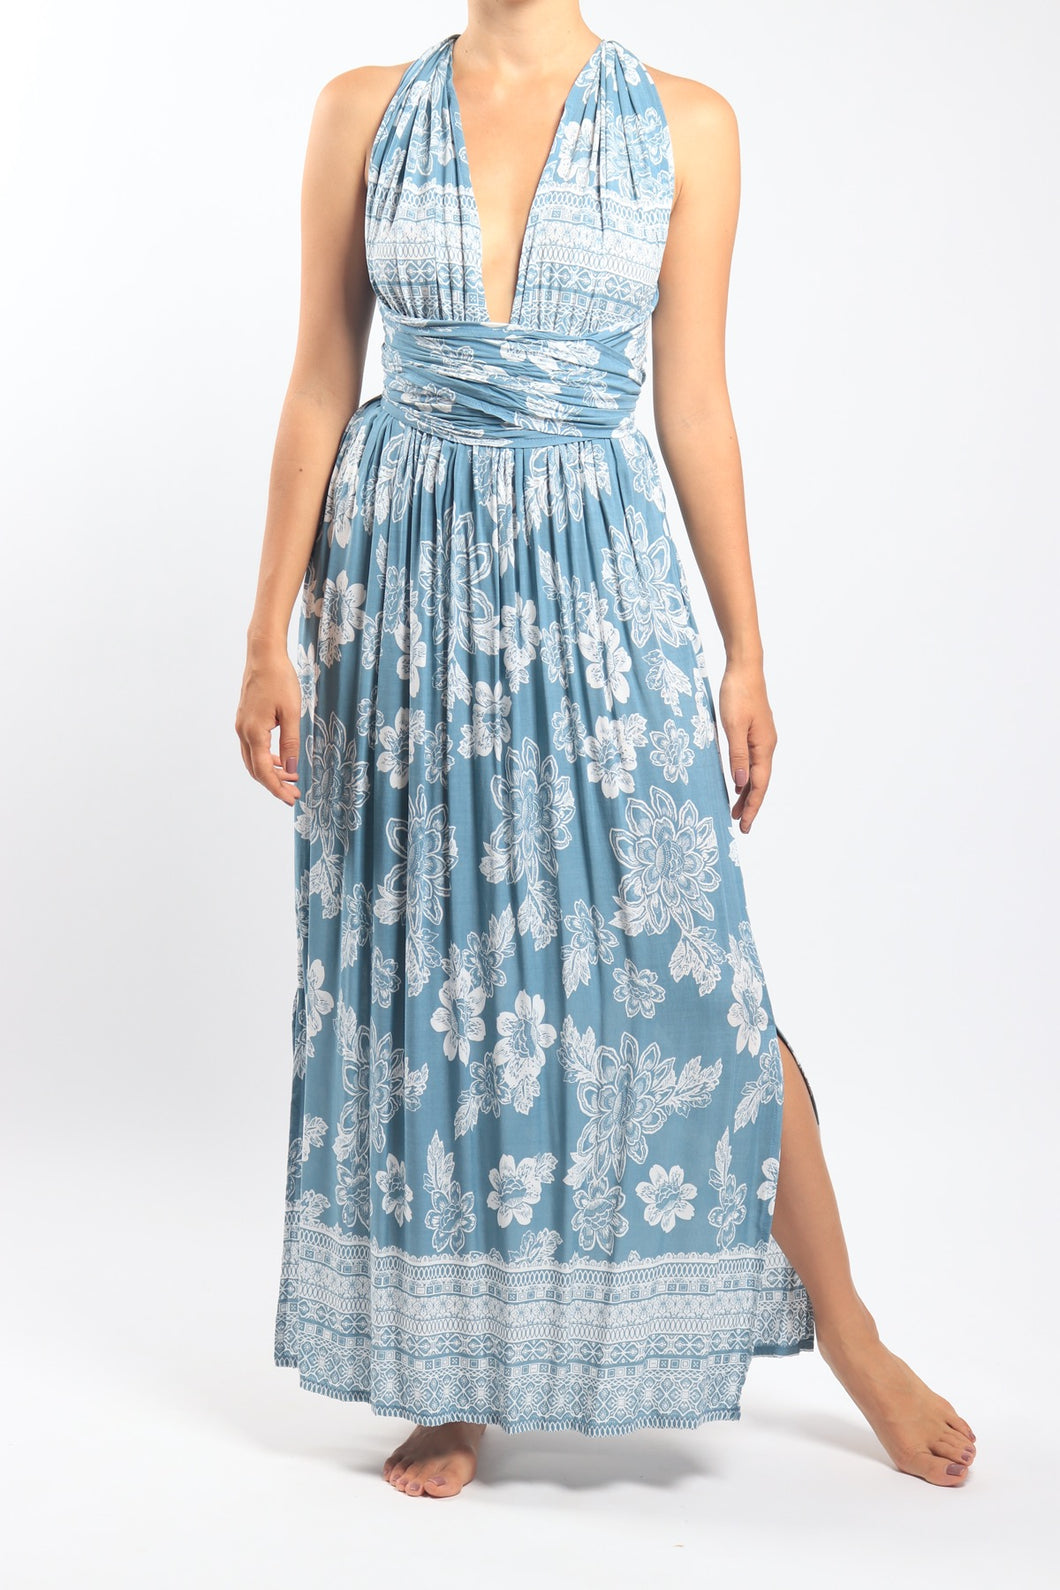 Venus Dress/Aloha Lt Blue